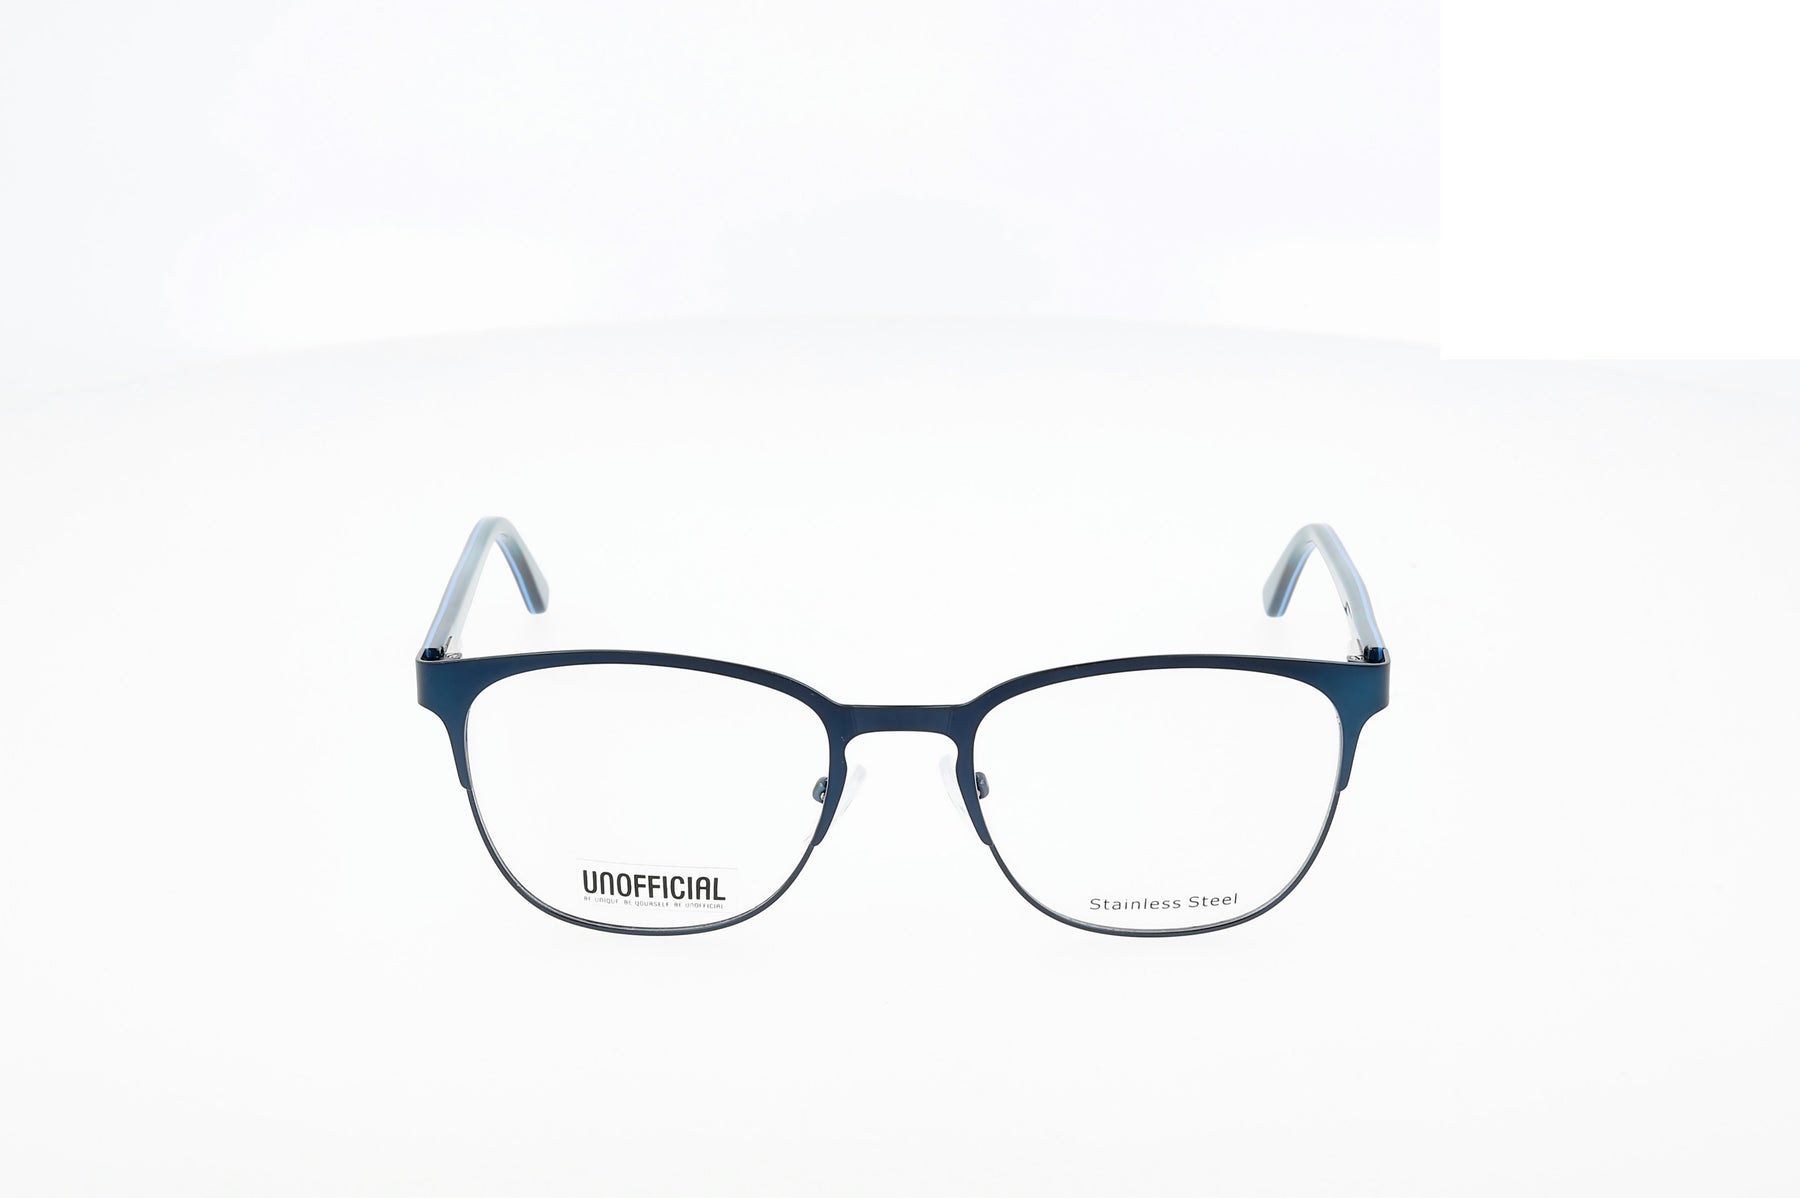 Vista-1 - Gafas oftálmicas Unofficial UNOM0010 Hombre Color Azul